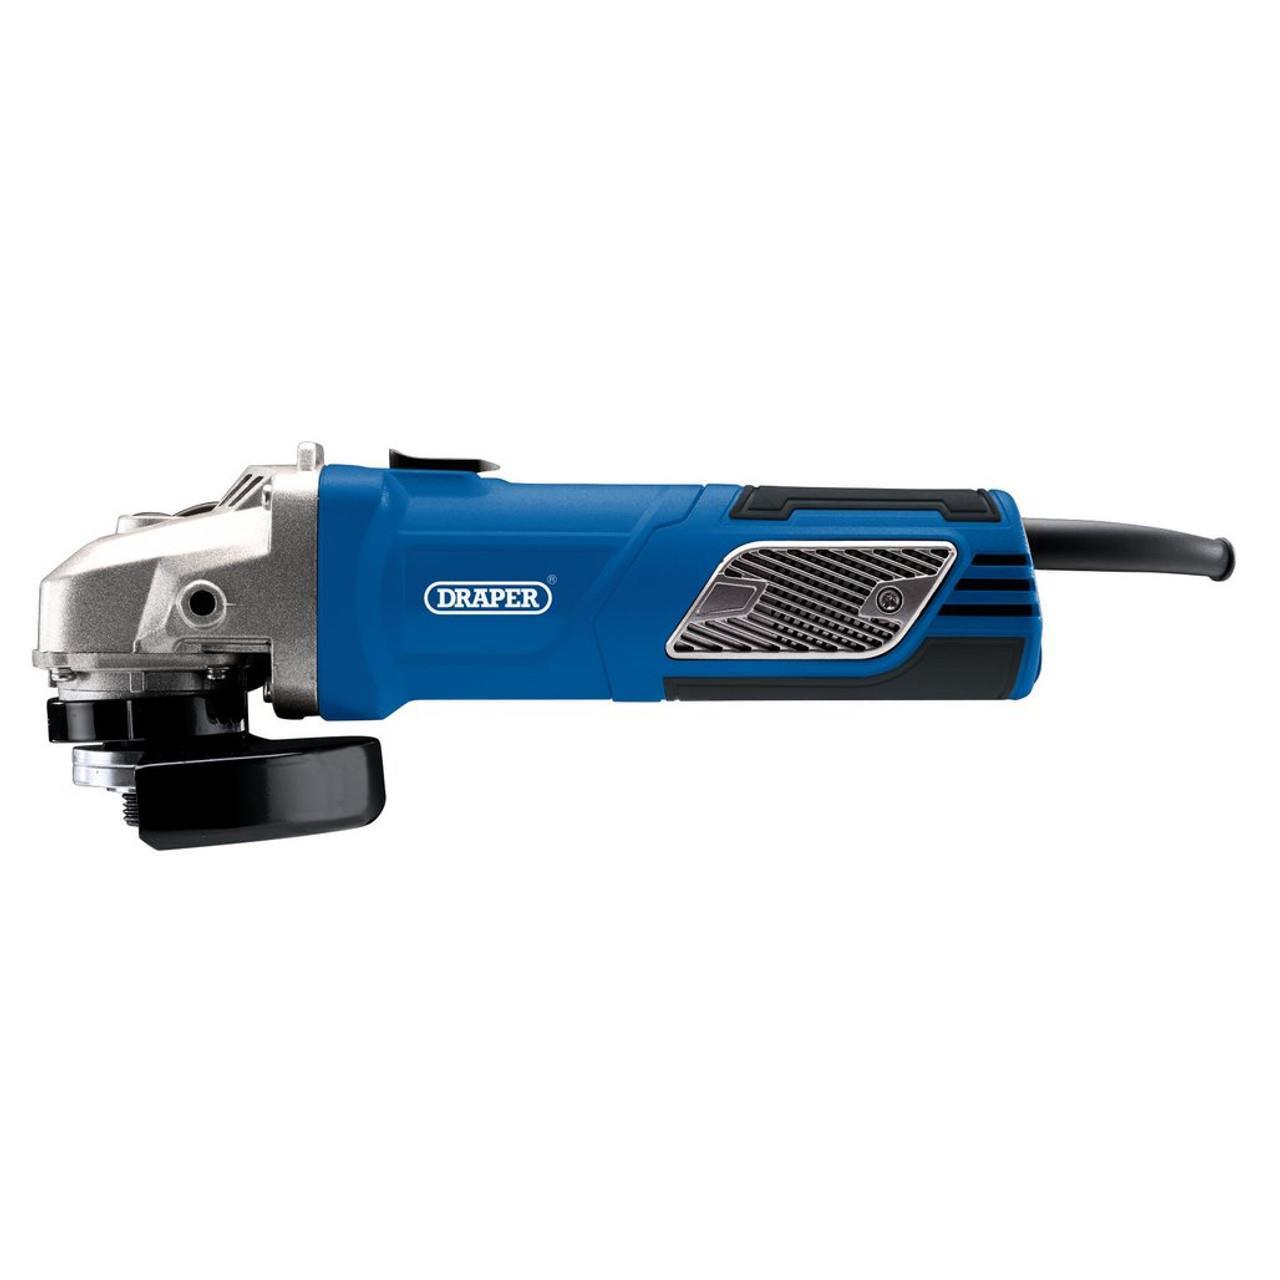 Draper 750W 4.5" 115mm Electric Angle Grinder Cutting Tool 240v 56480 - Tools 2U Direct SW